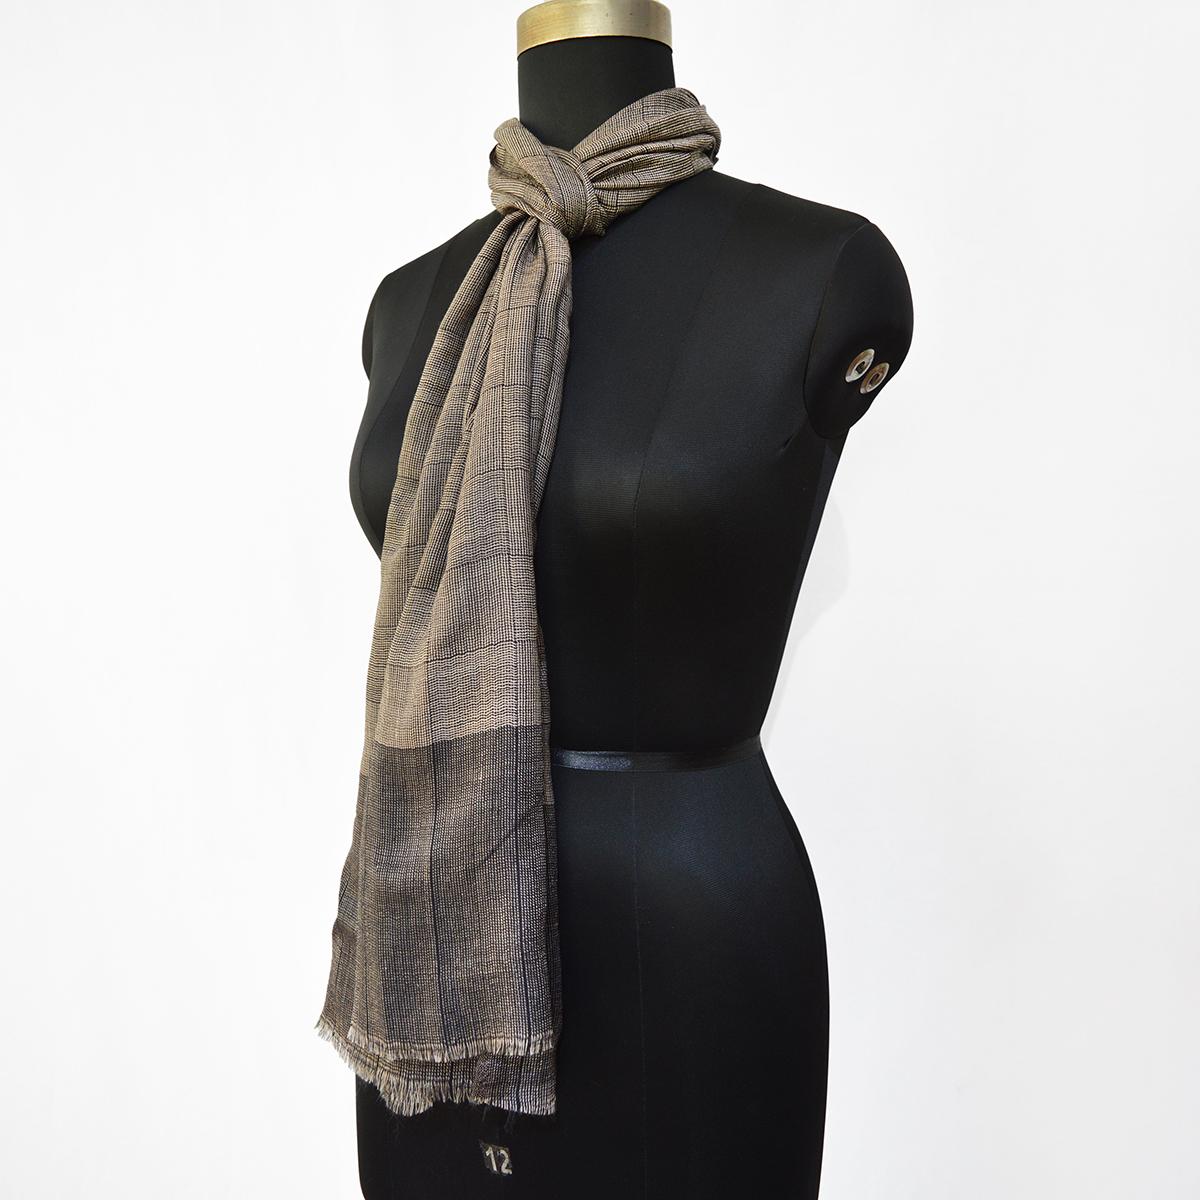 CHECK fine wool blend scarf for men, beige and black colour, reversible, gift for men